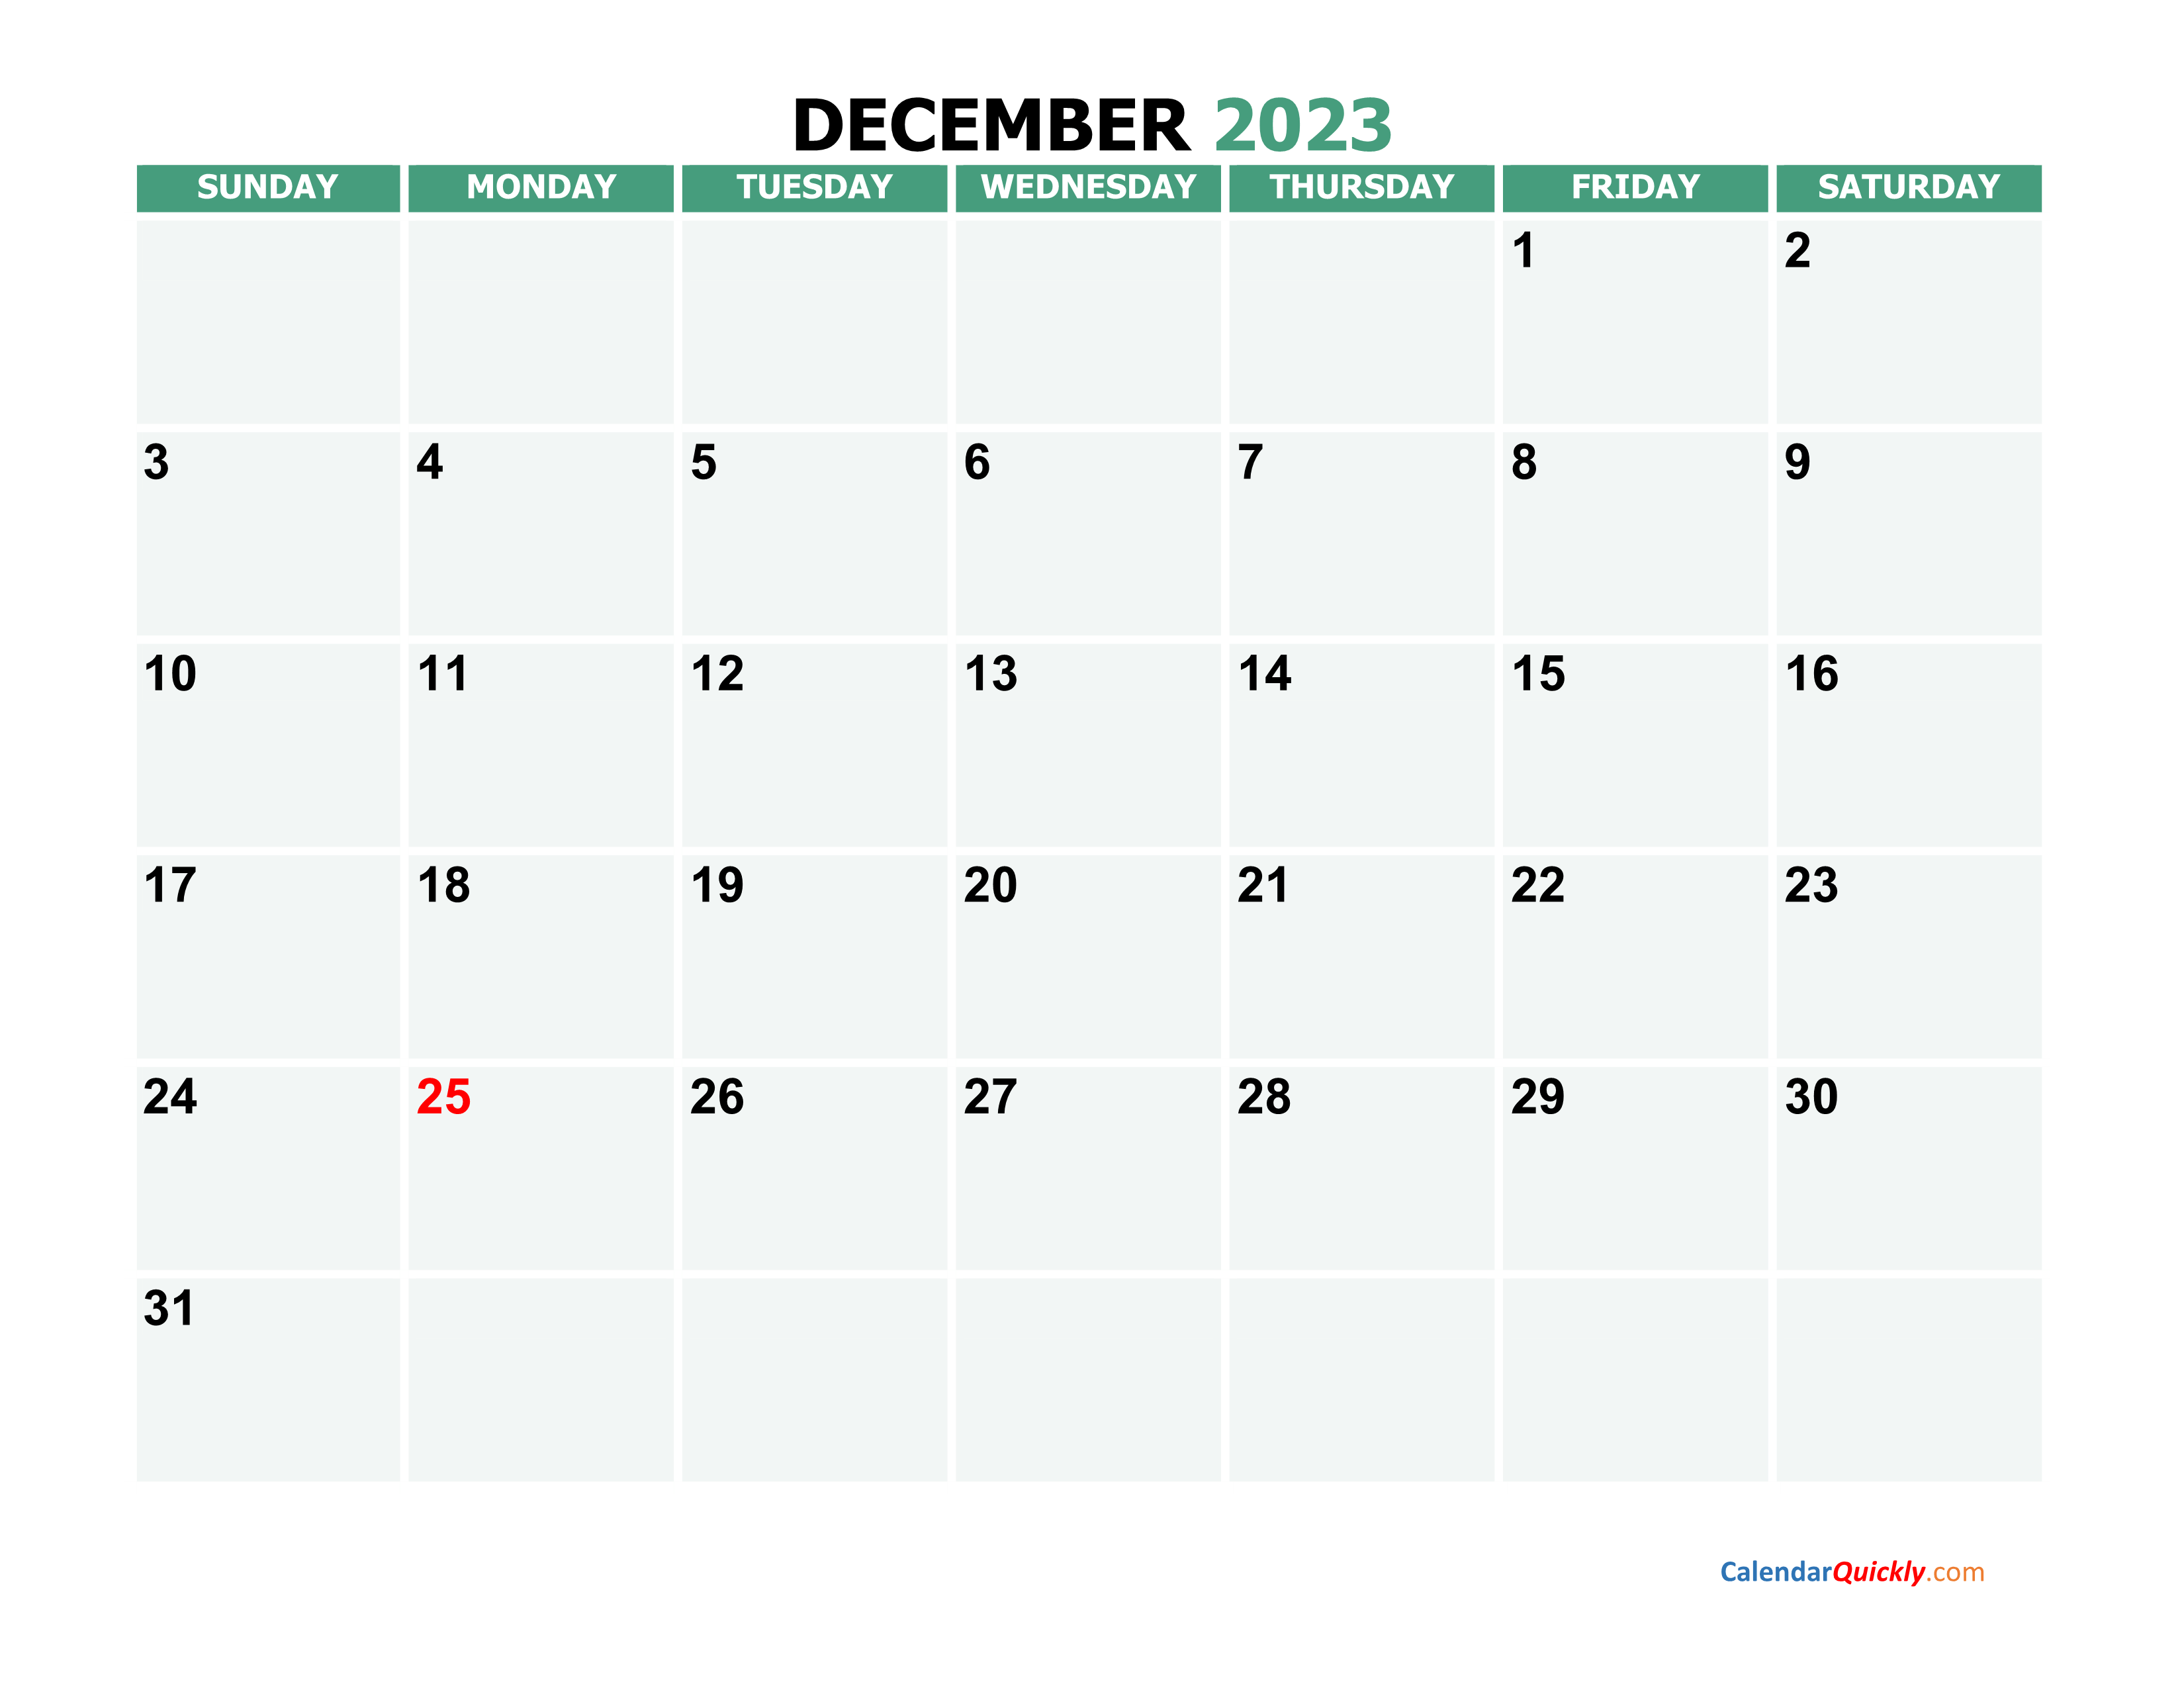 october to december 2023 calendar calendar quickly - december 2023 ...